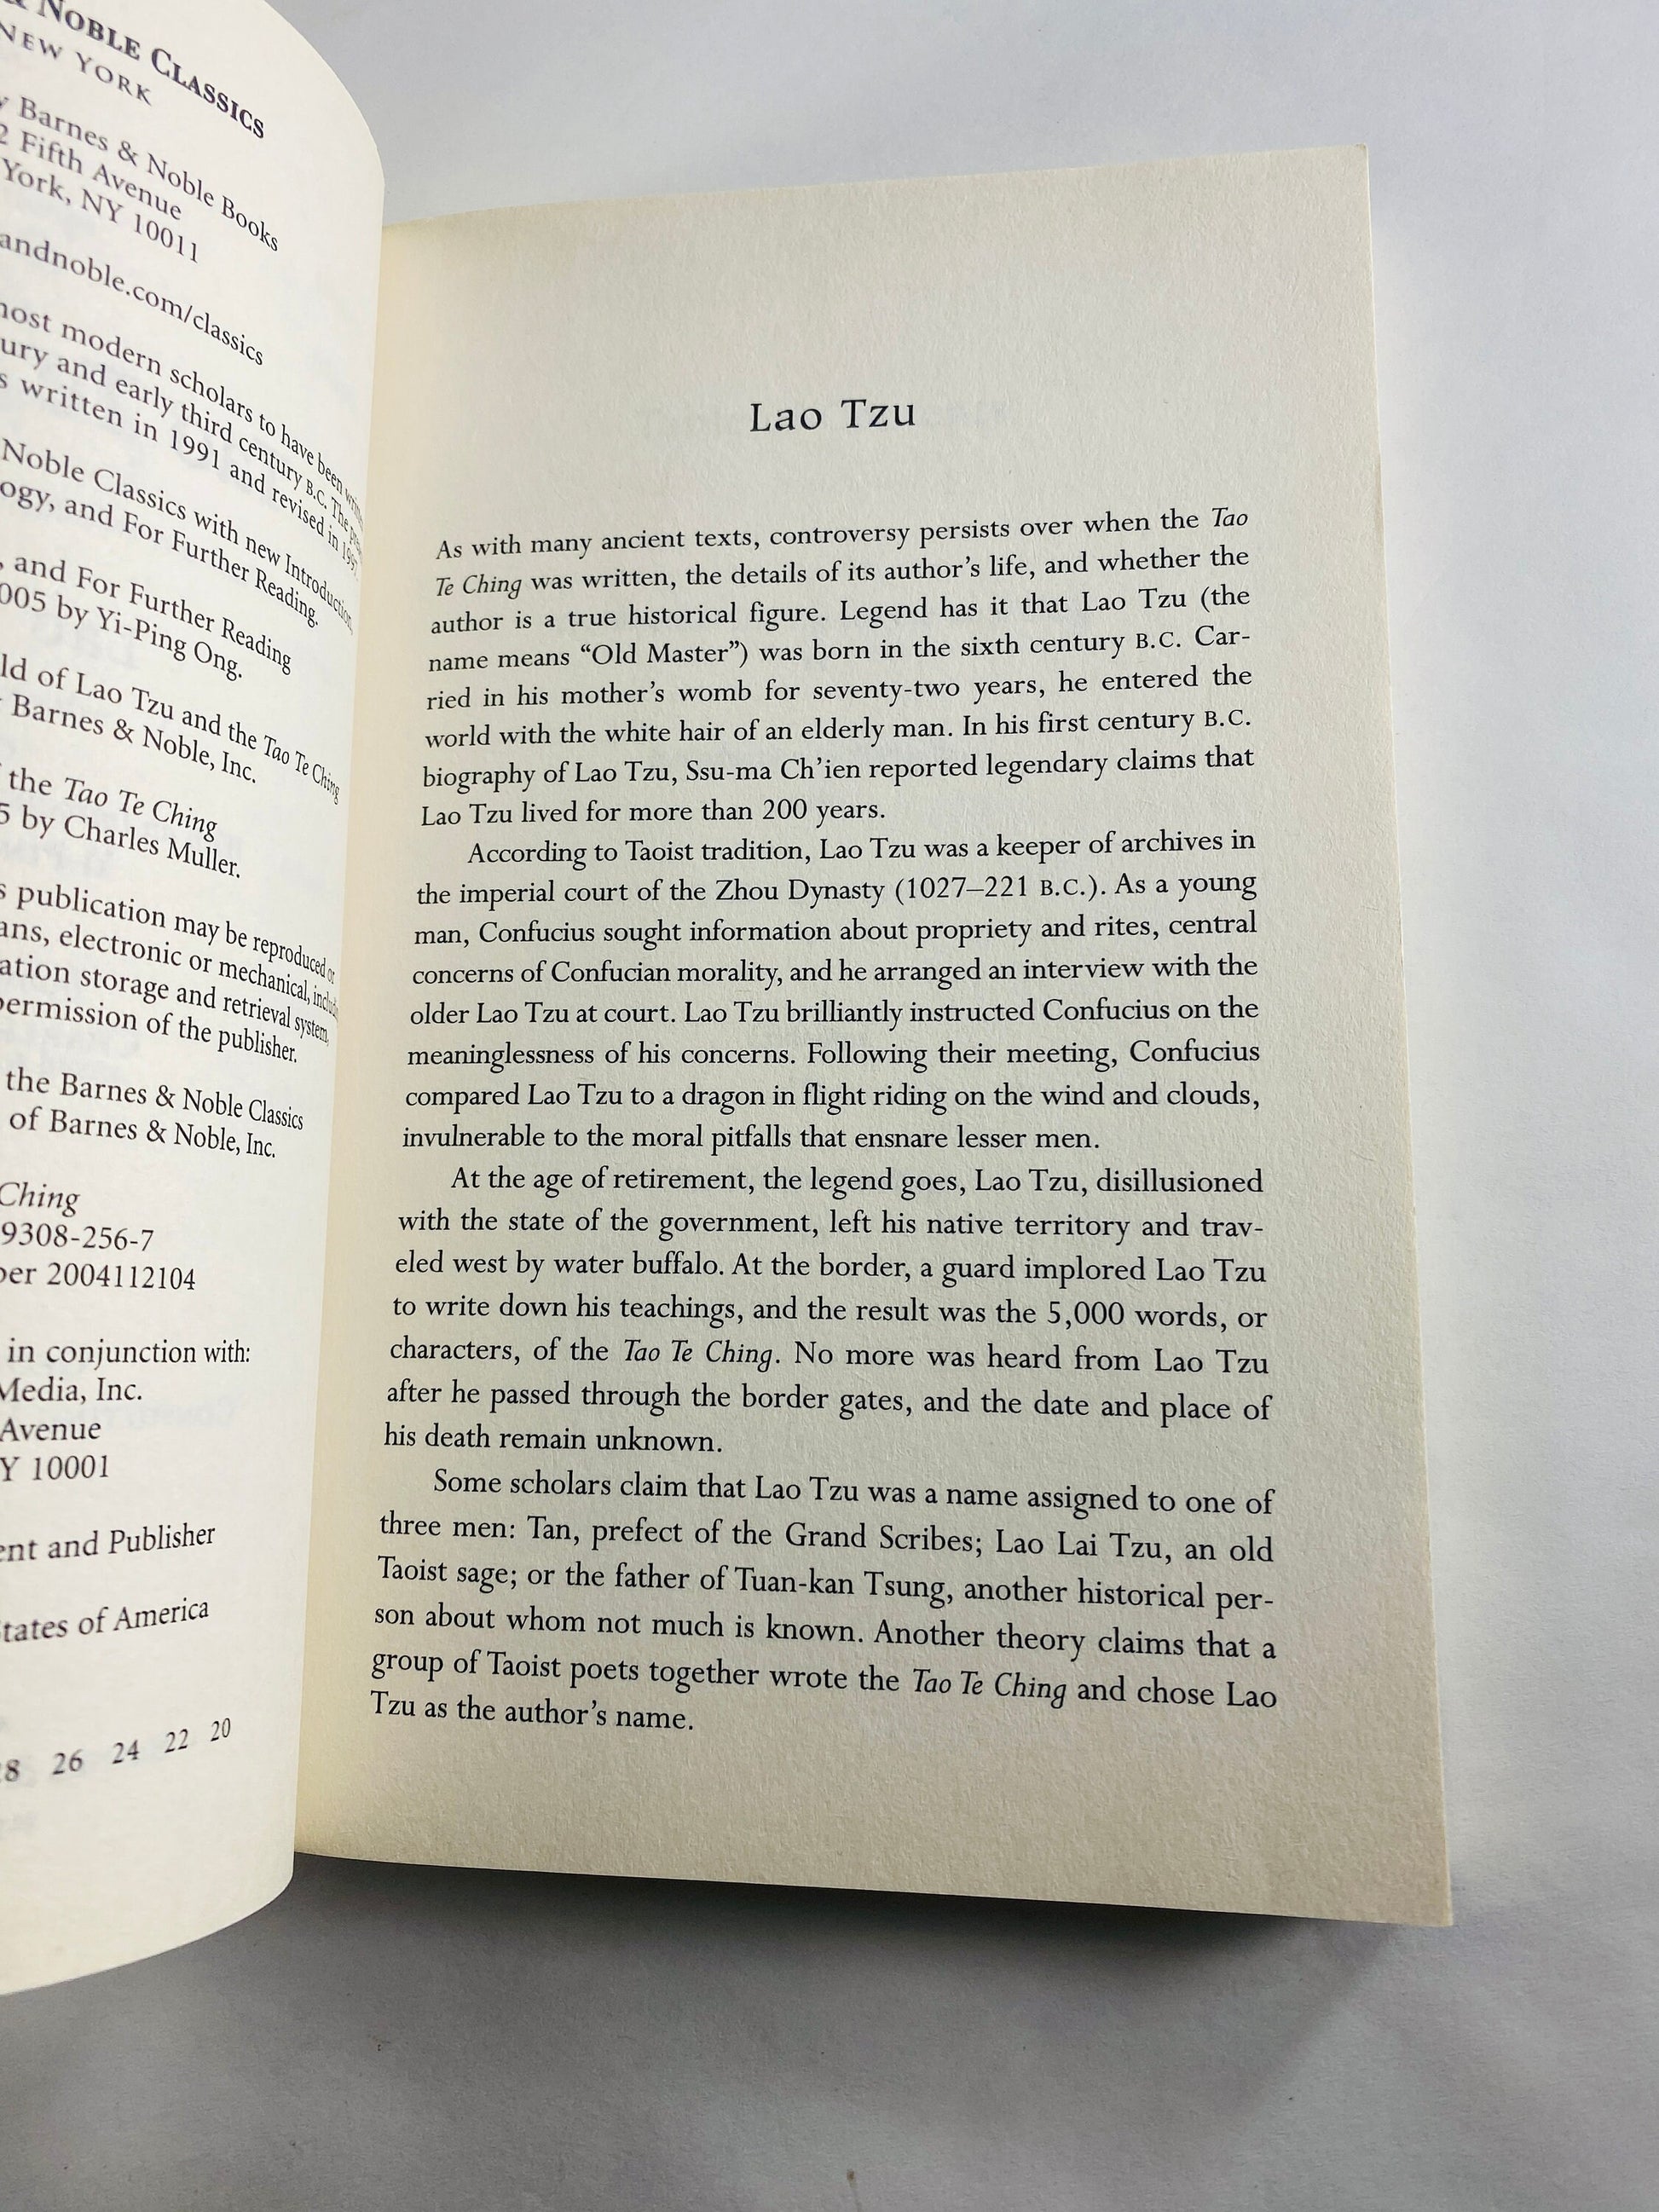 Tao Te Ching (Barnes & Noble Classics Series) by Lao Tzu, Paperback